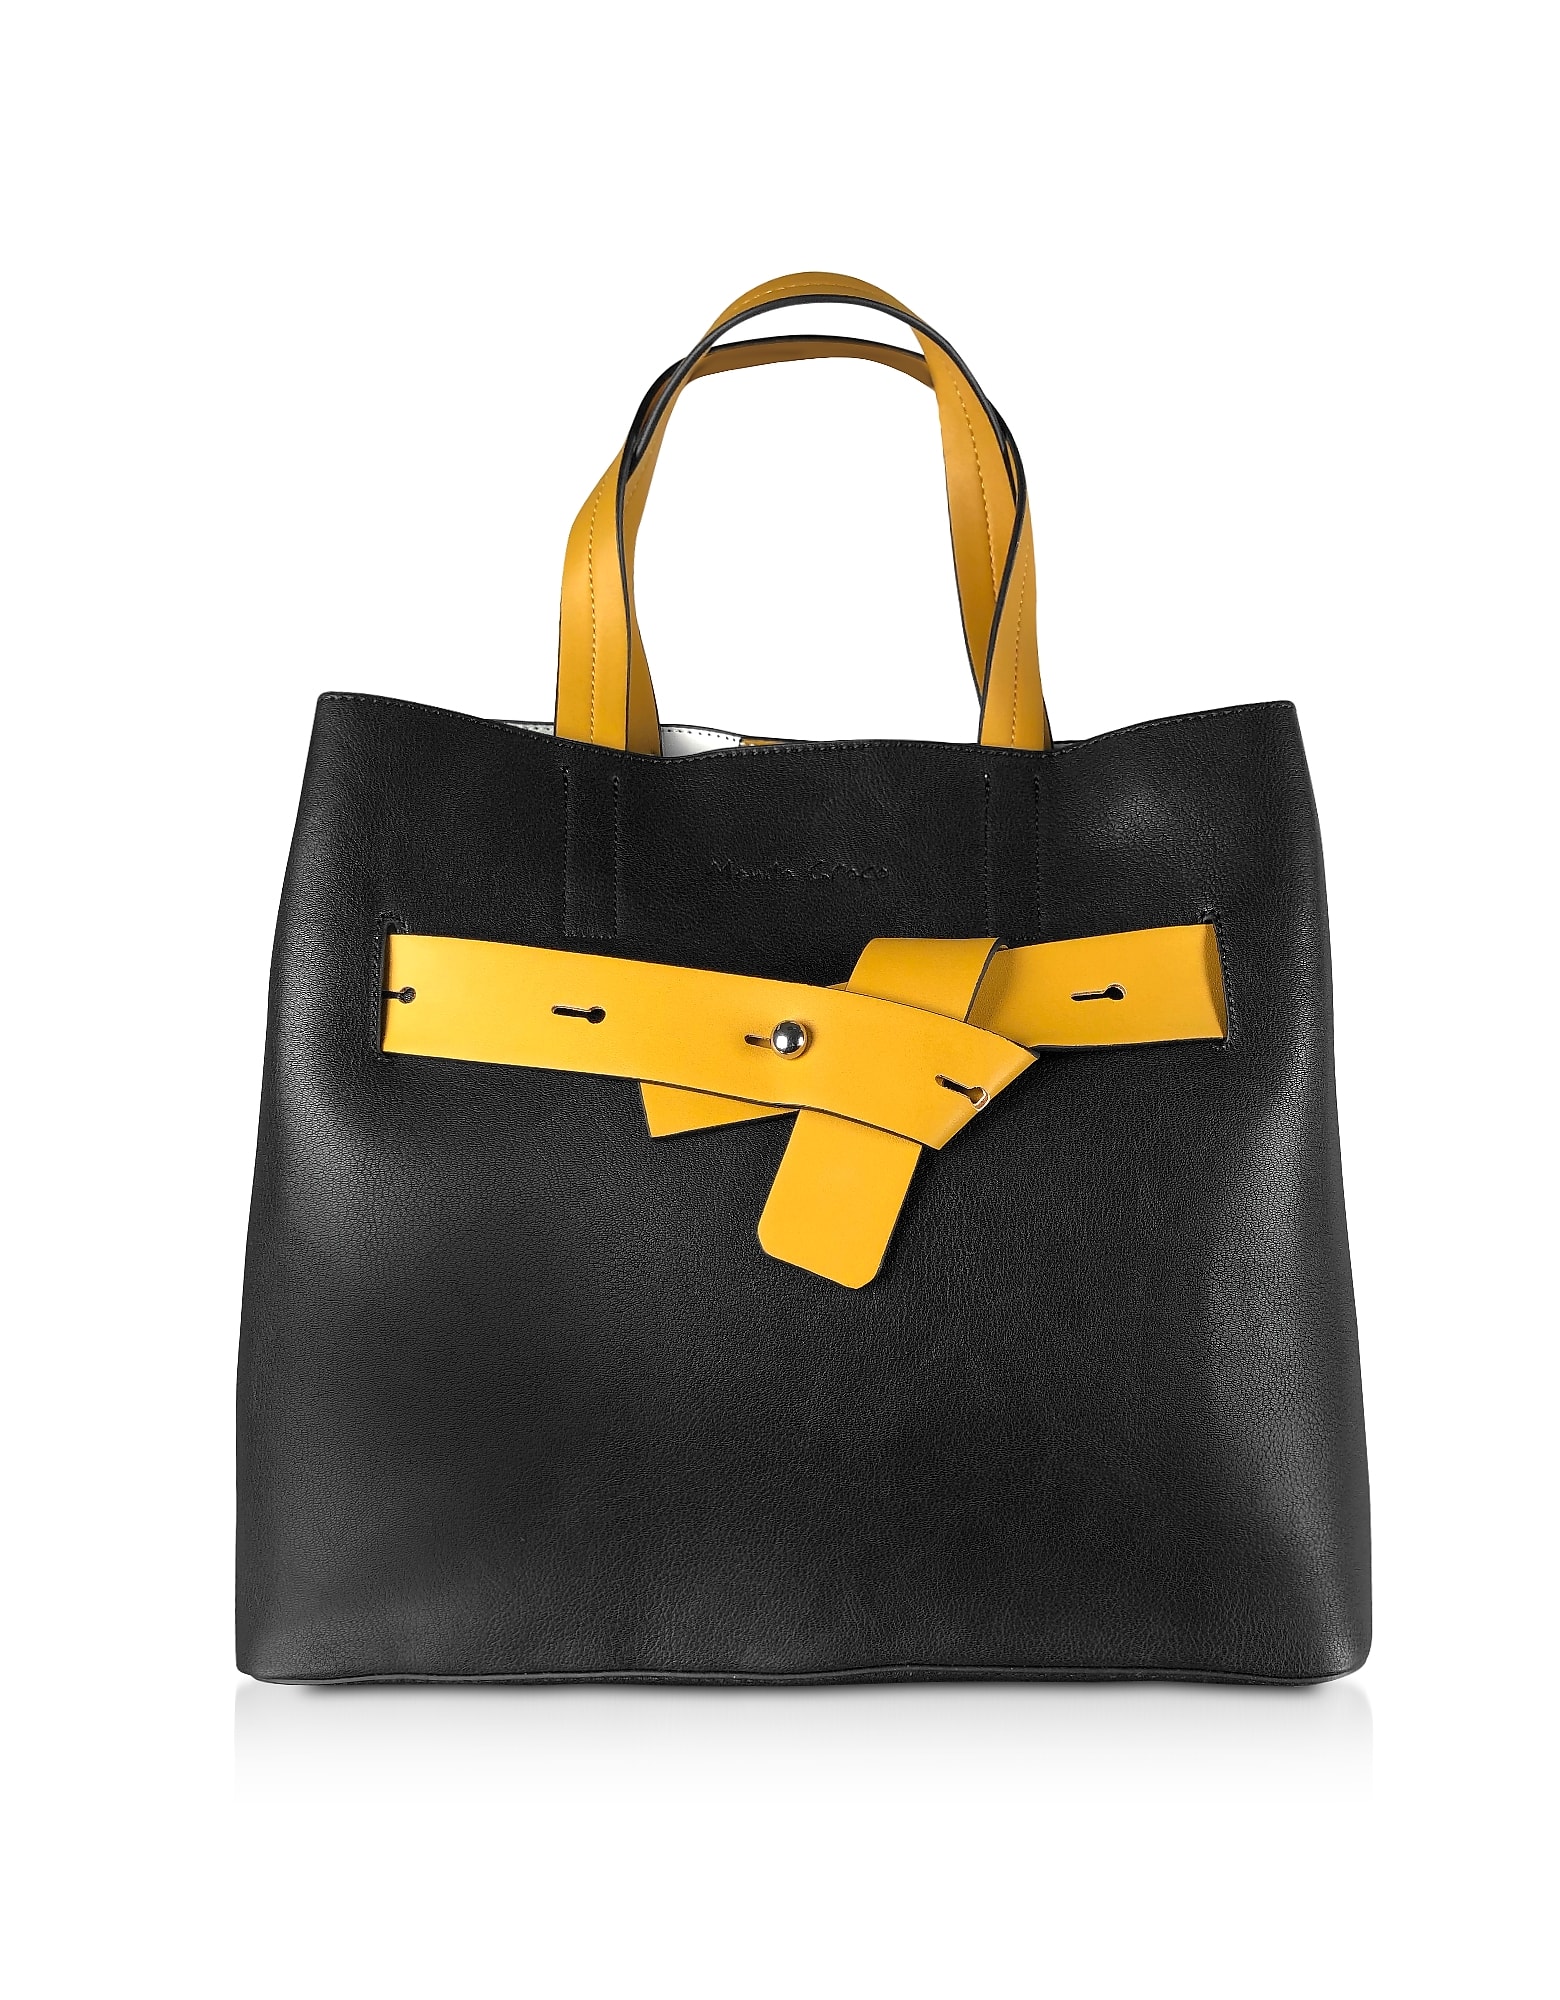 Manila Grace Black & Yellow Tote Bag